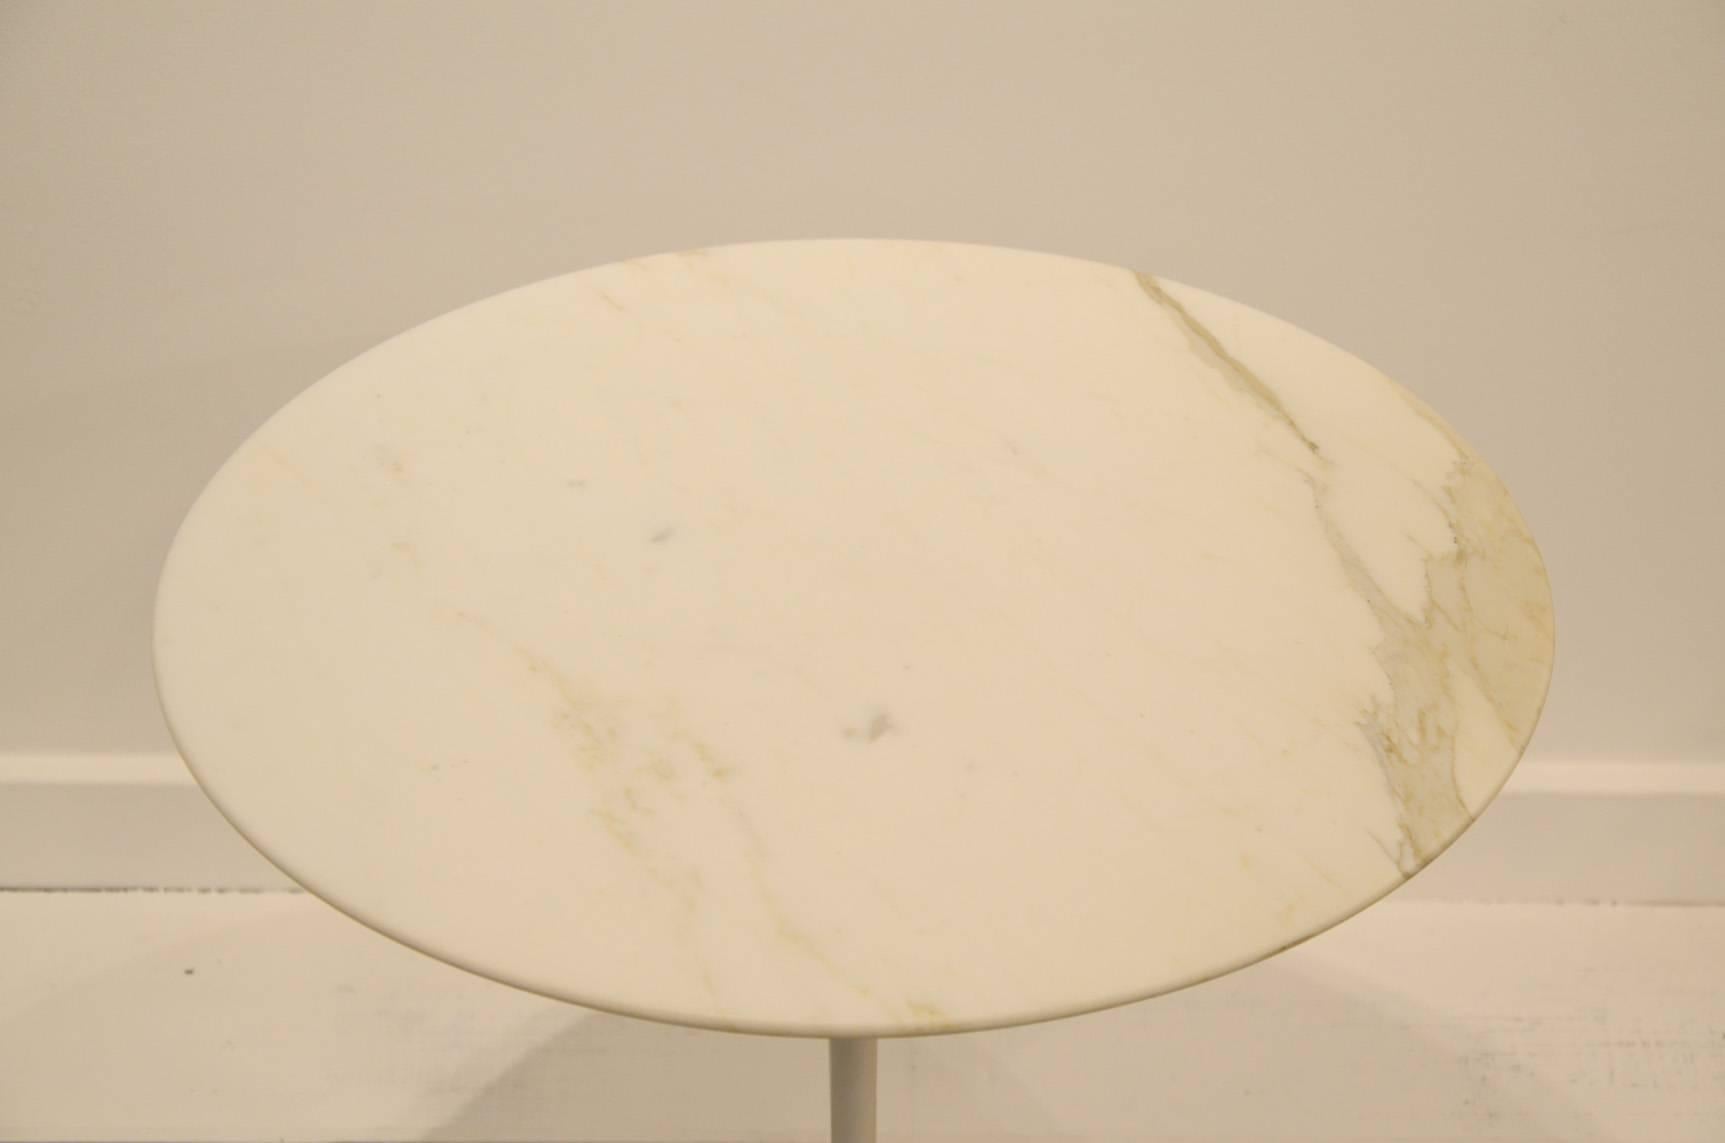 Saarinen marble-top tulip table for Knoll.